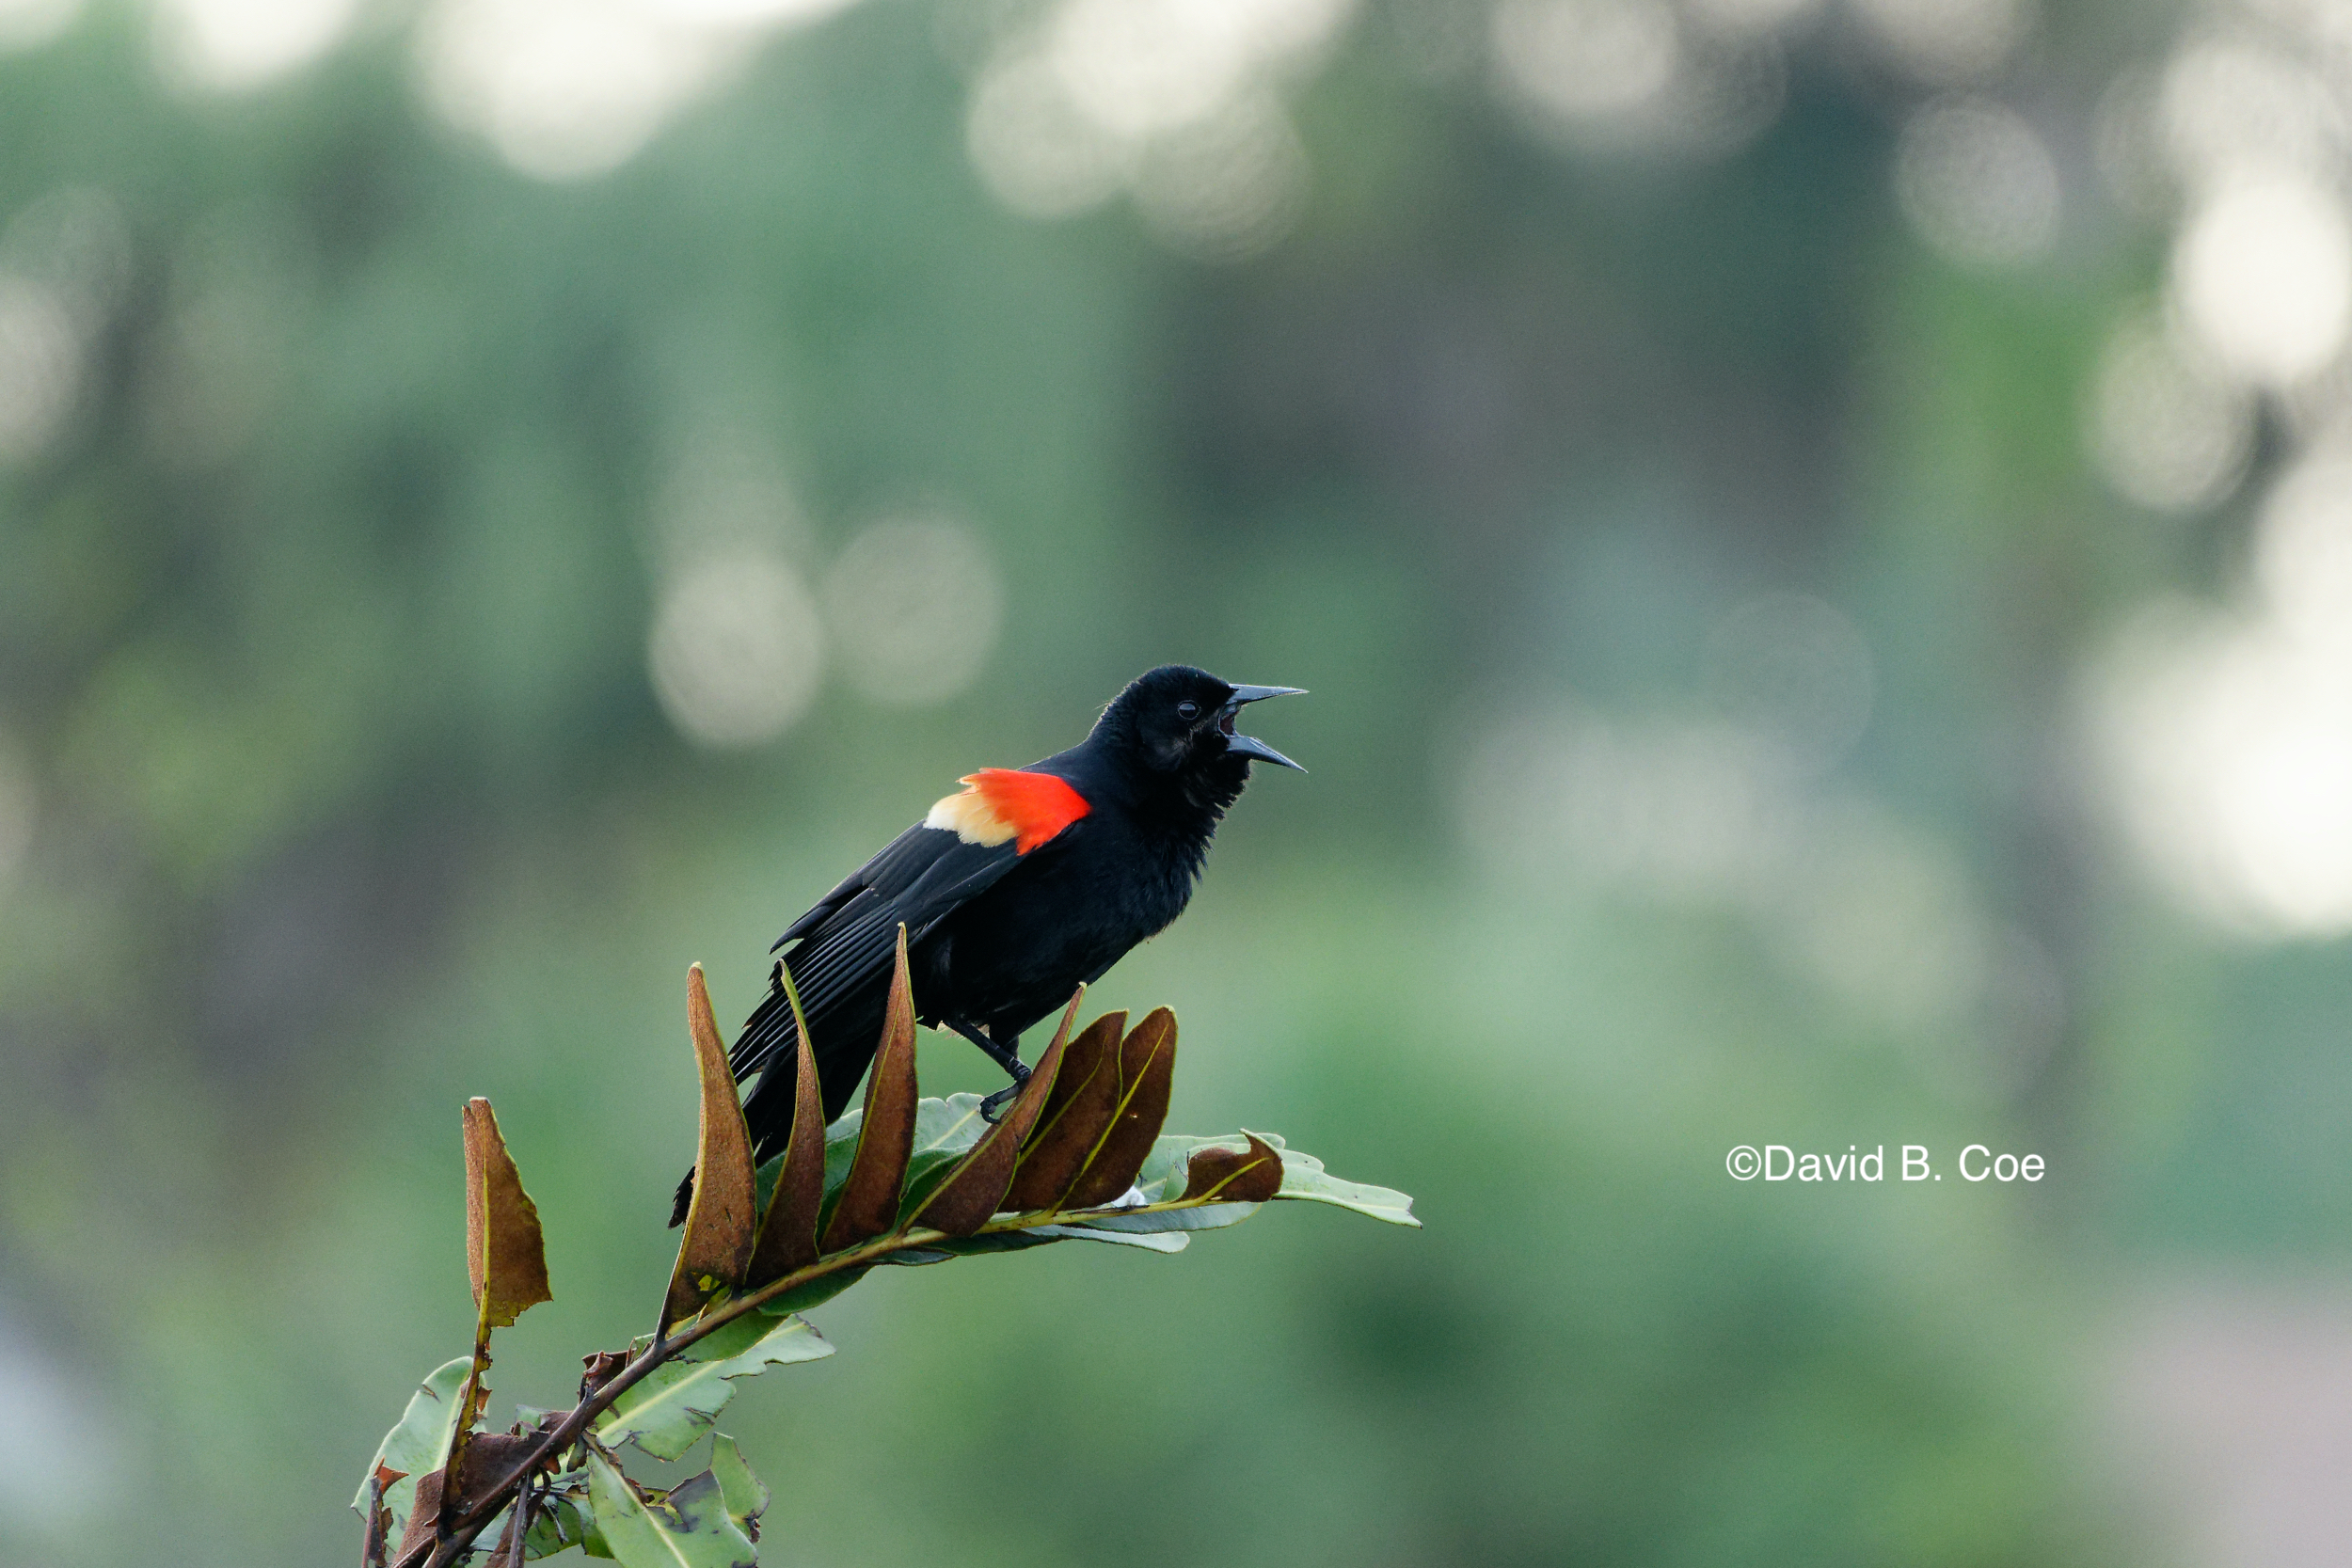 Red-winged Blackbird, by David B. Coe